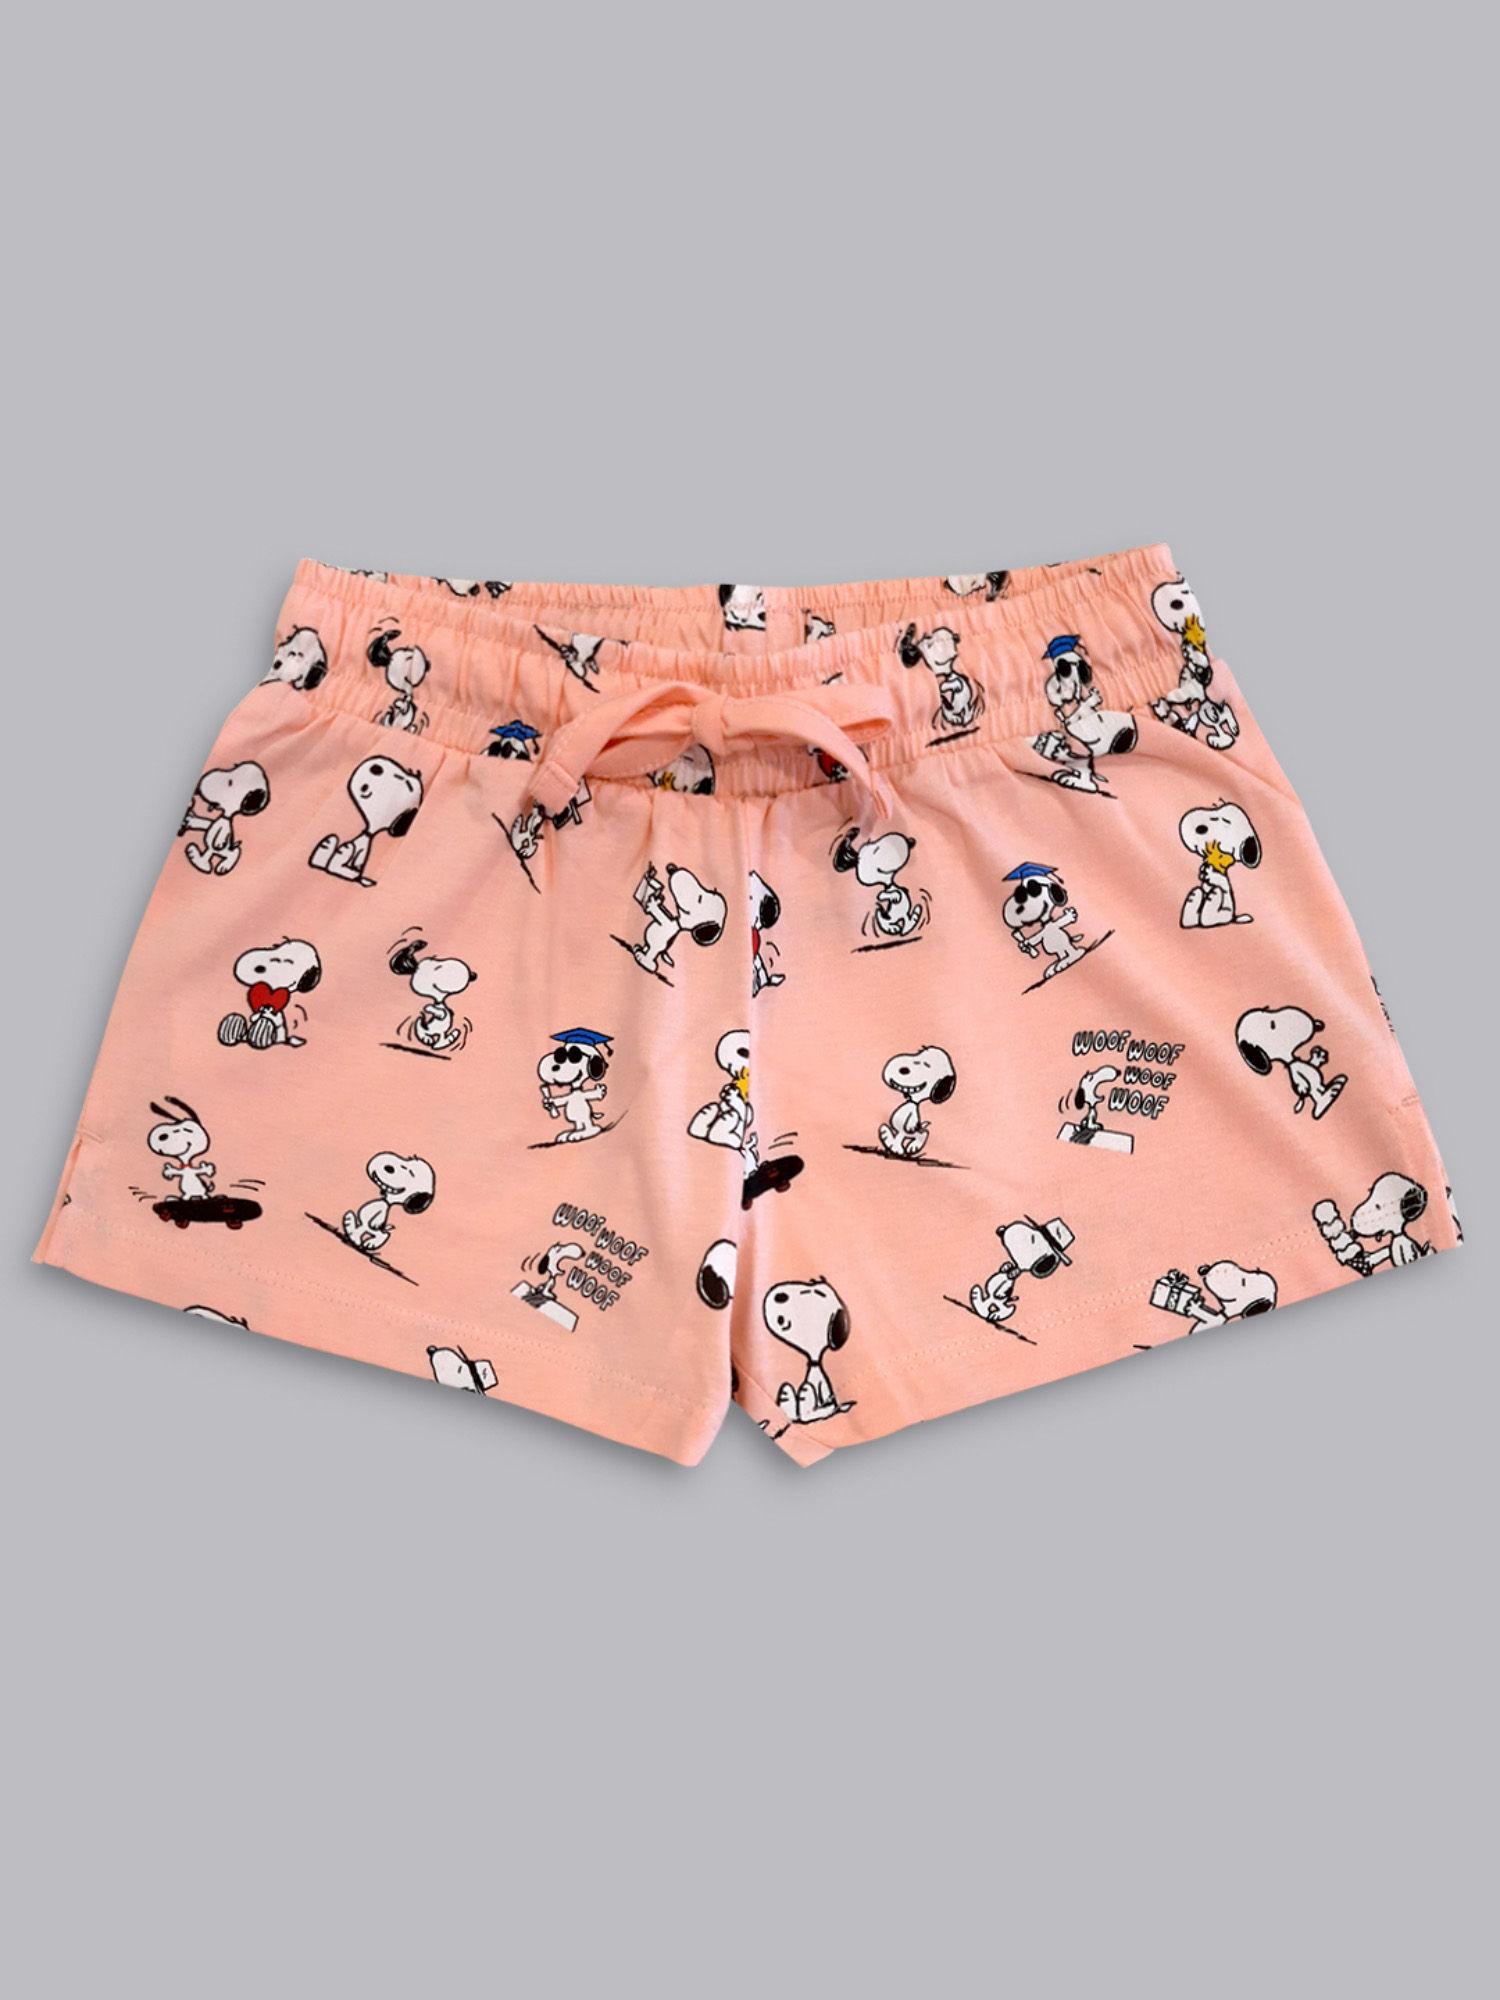 peanuts printed shorts for girls - peach